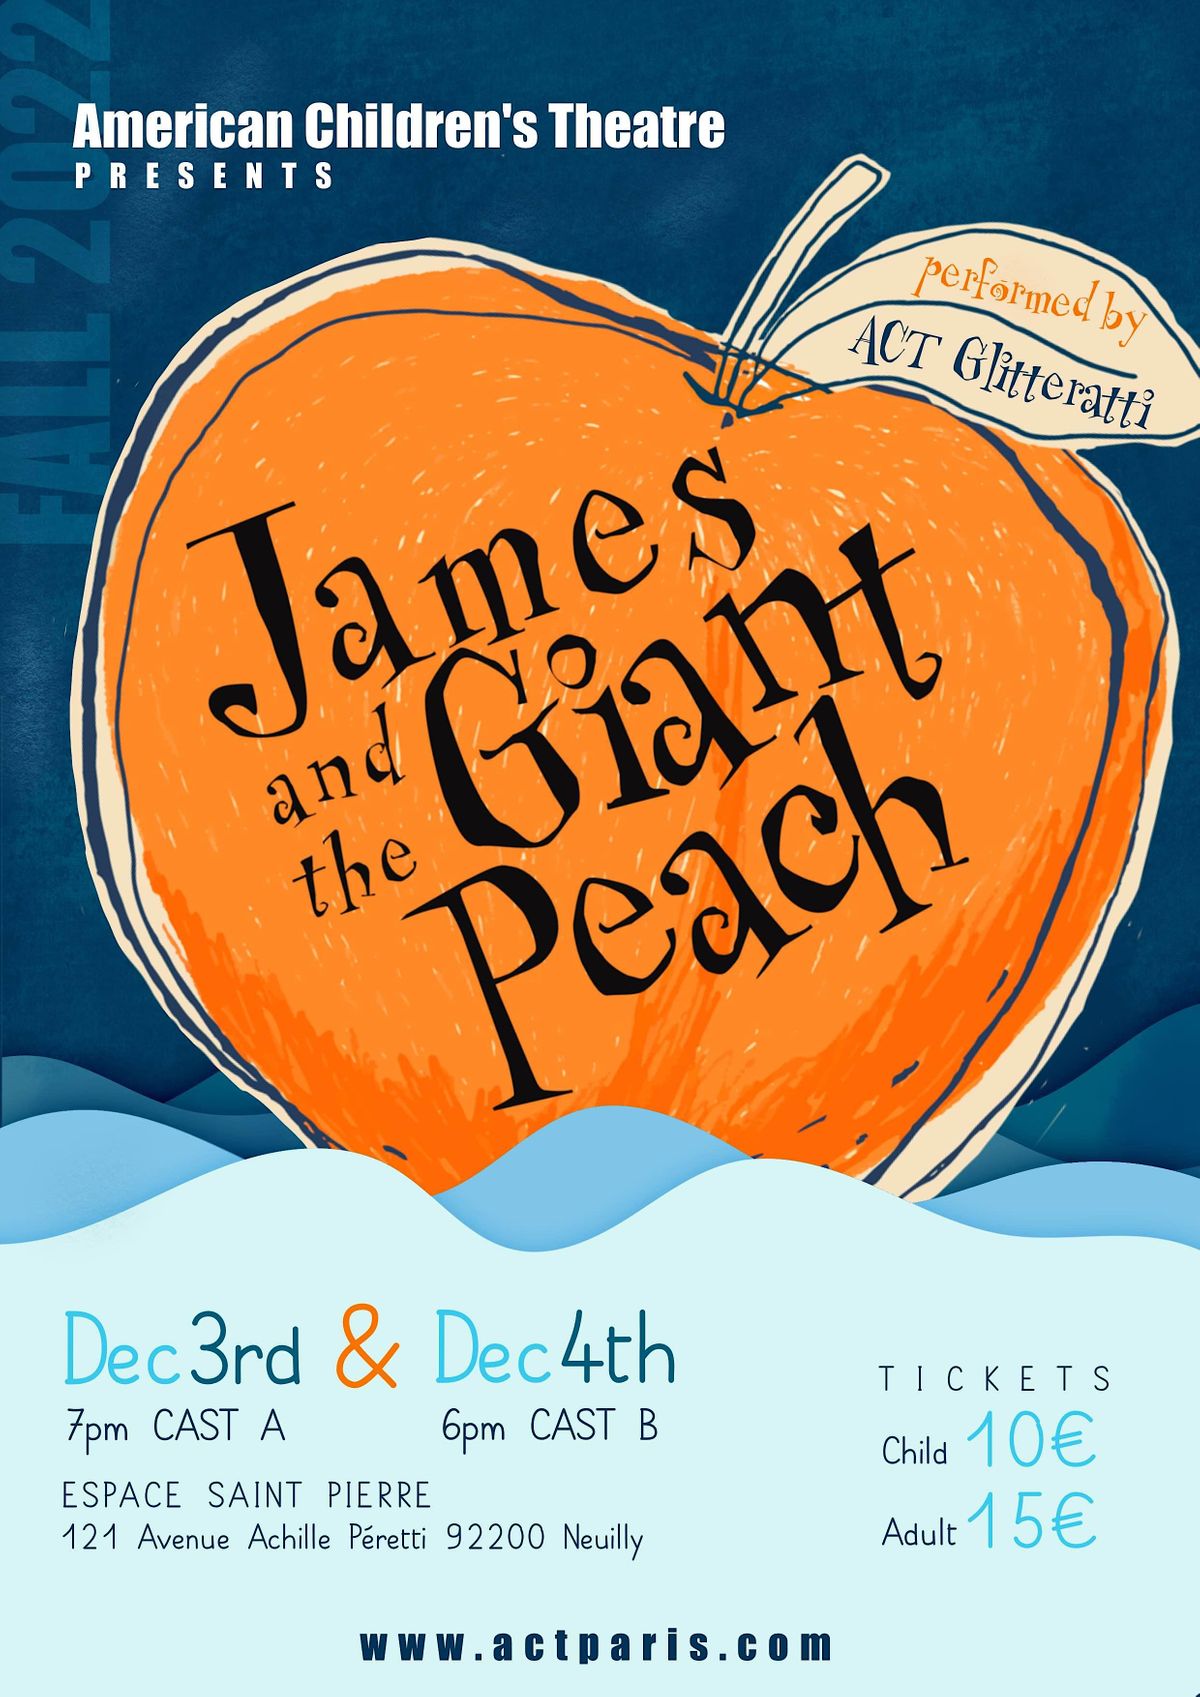 James and the Giant Peach, Glitteratti CAST B at 6pm.